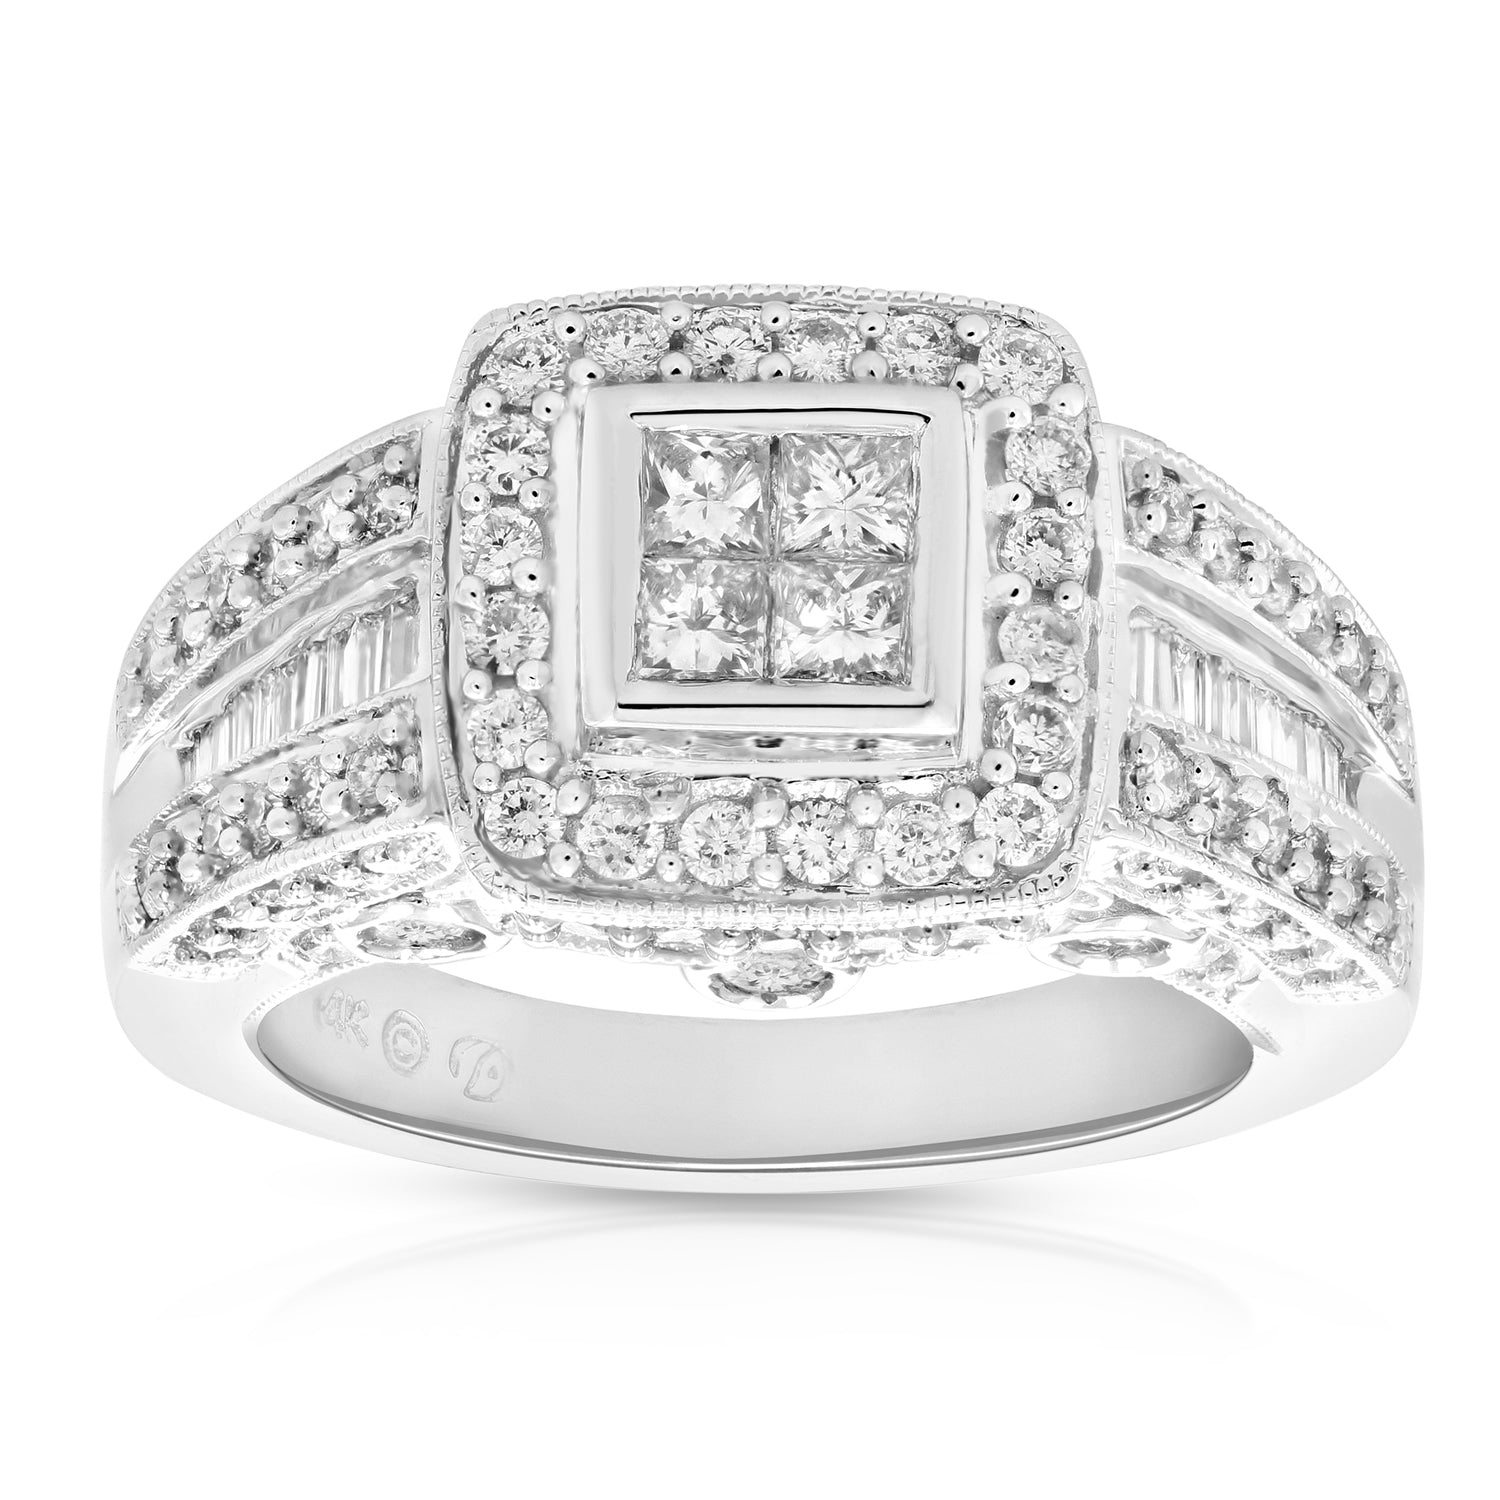 1.65 cttw Diamond Engagement Ring 14K White Gold Wedding Bridal Size 5